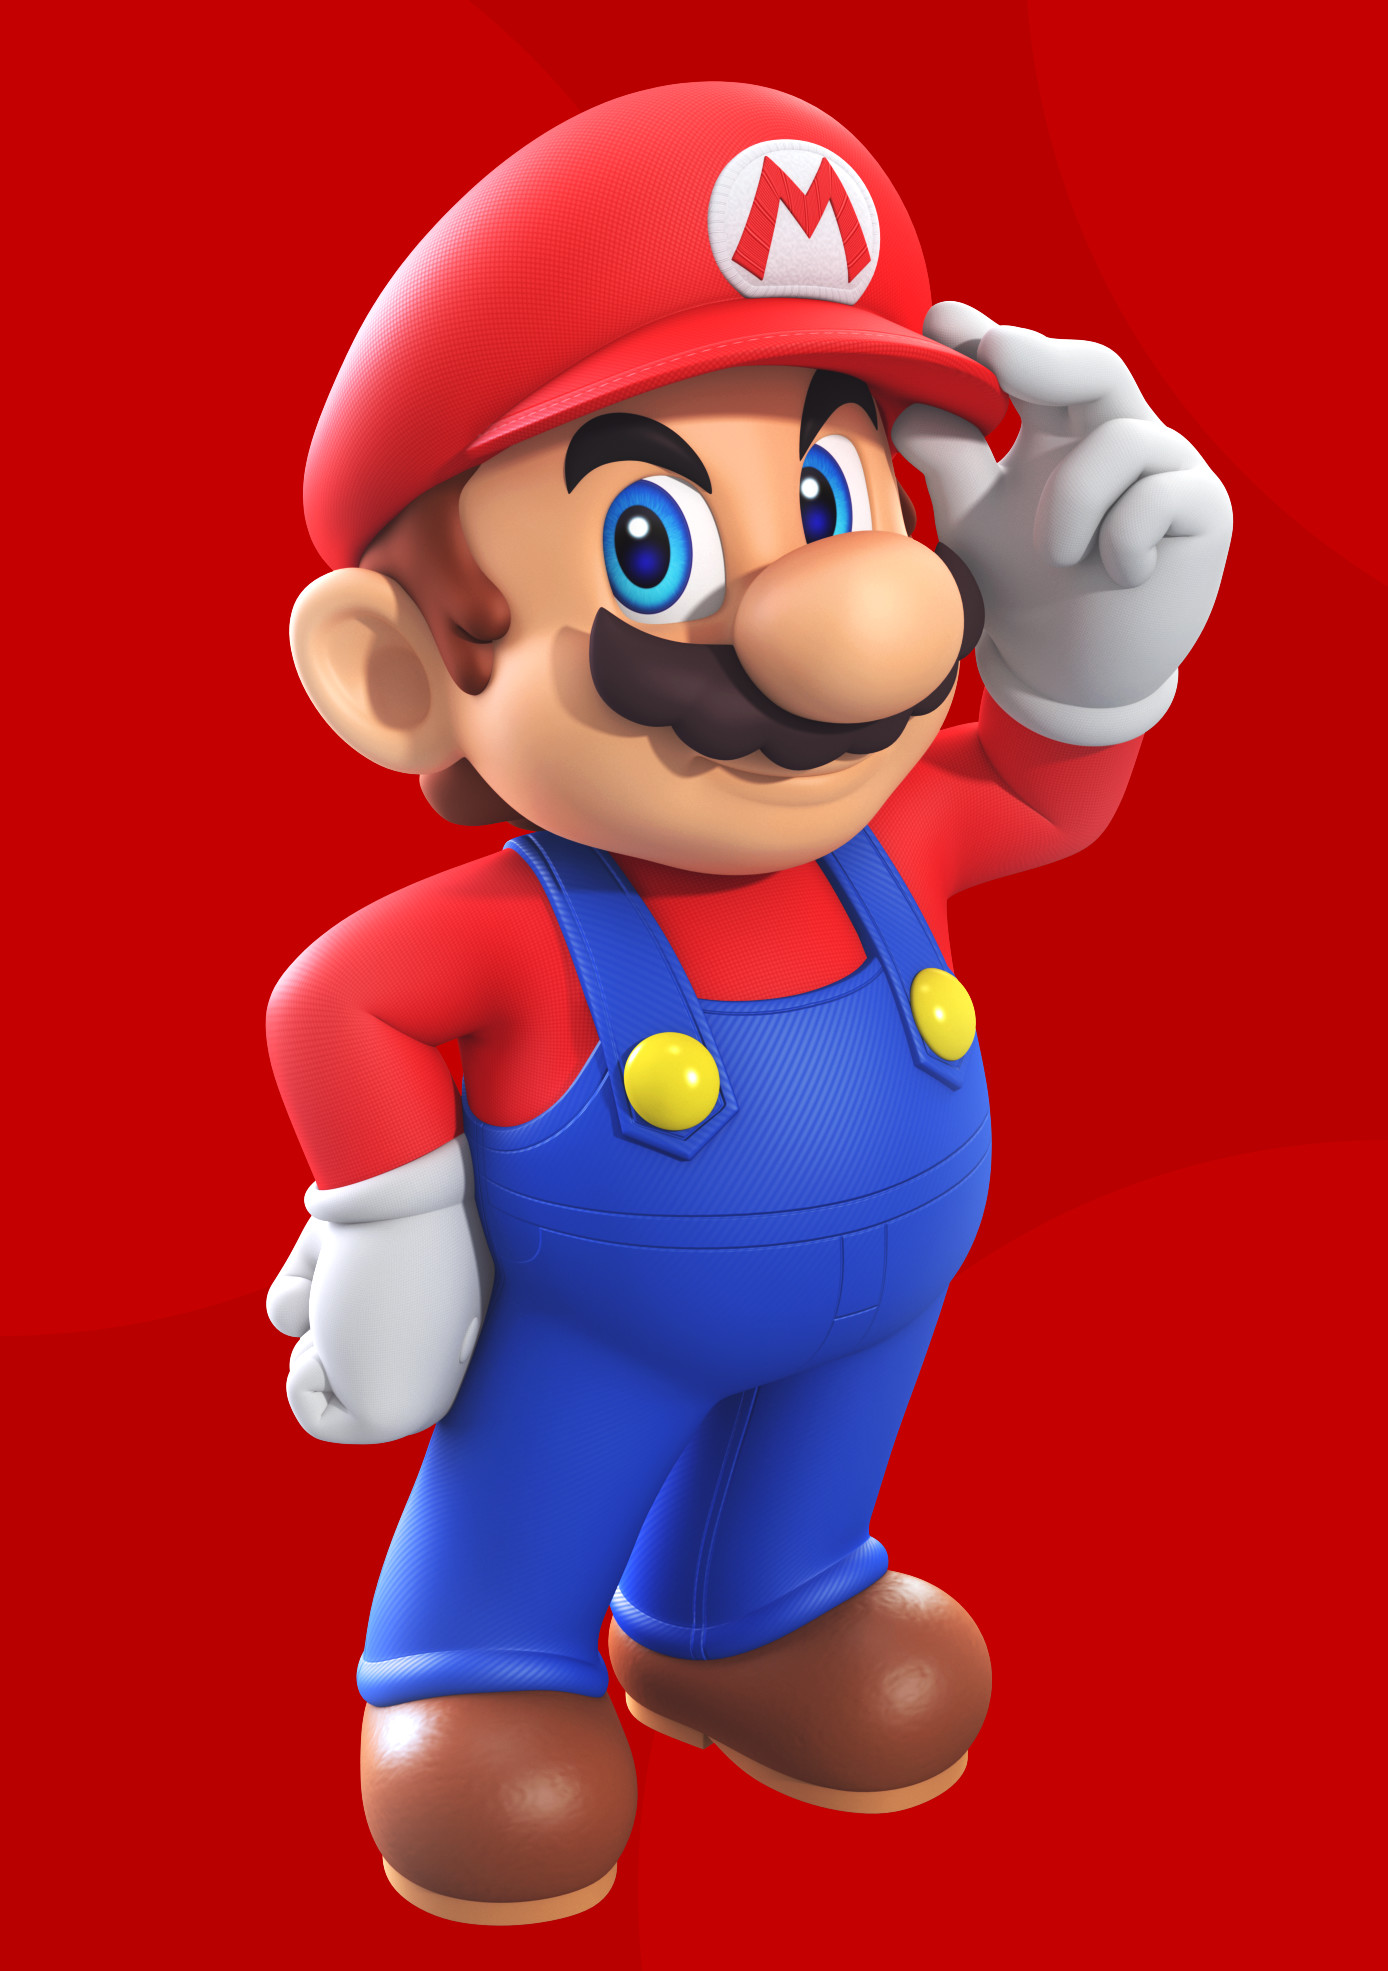 Mario standing.